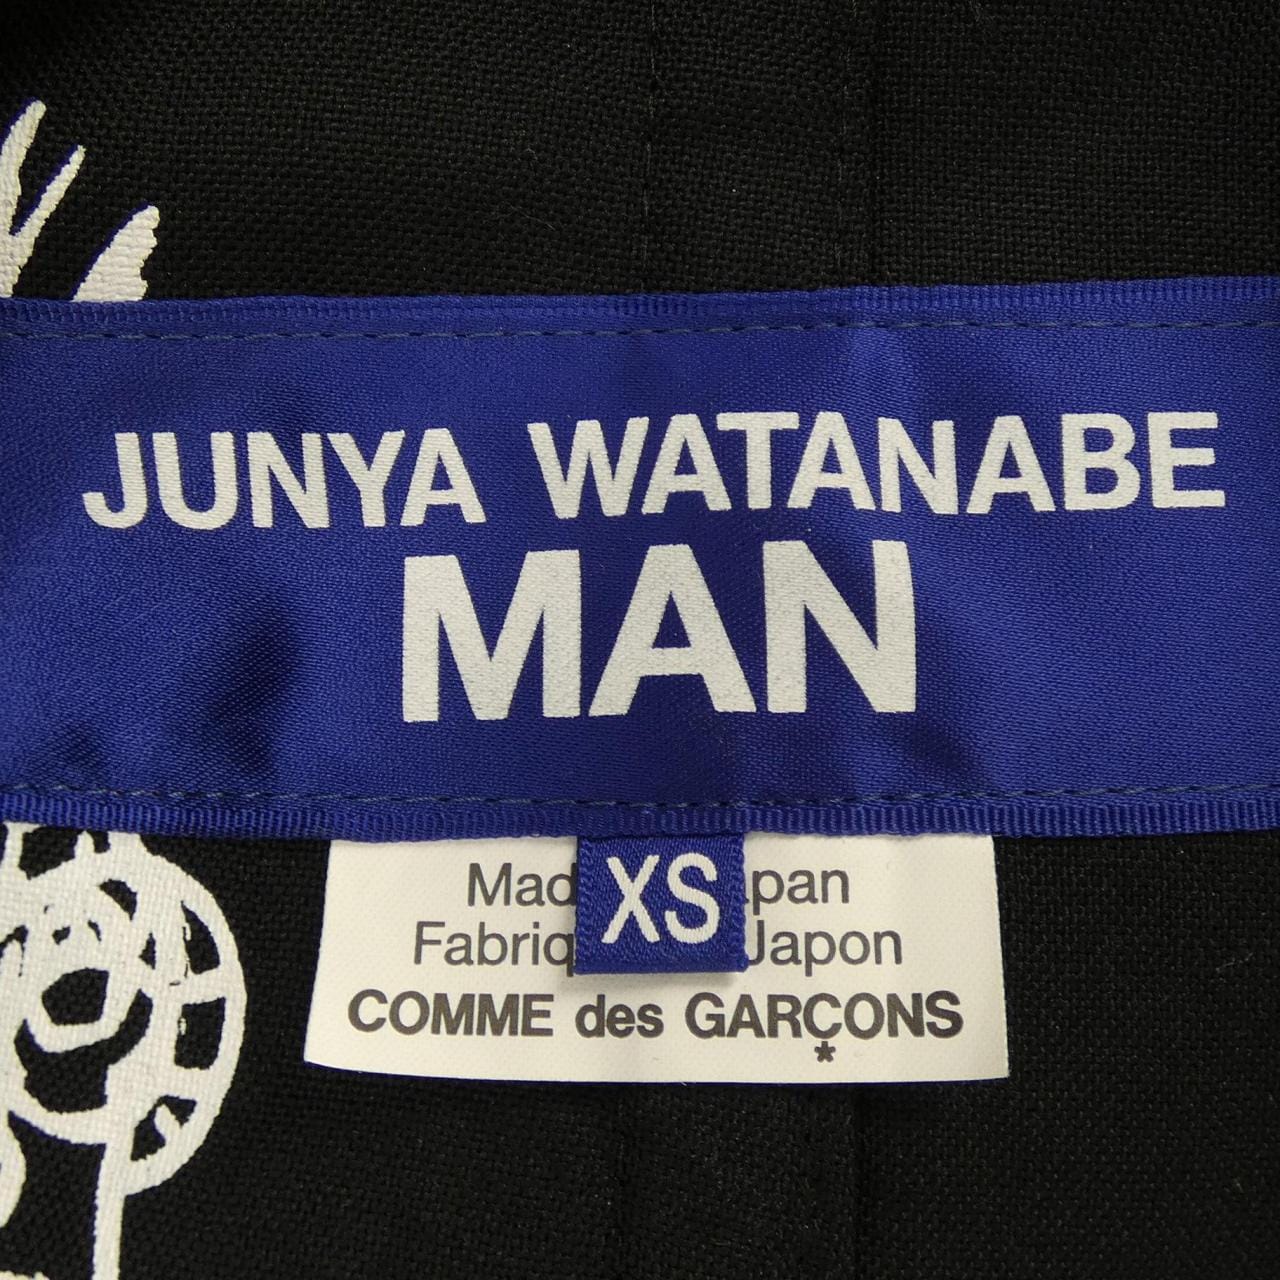 Junya Watanabeman JUNYA WATANABE MAN西裝夾克